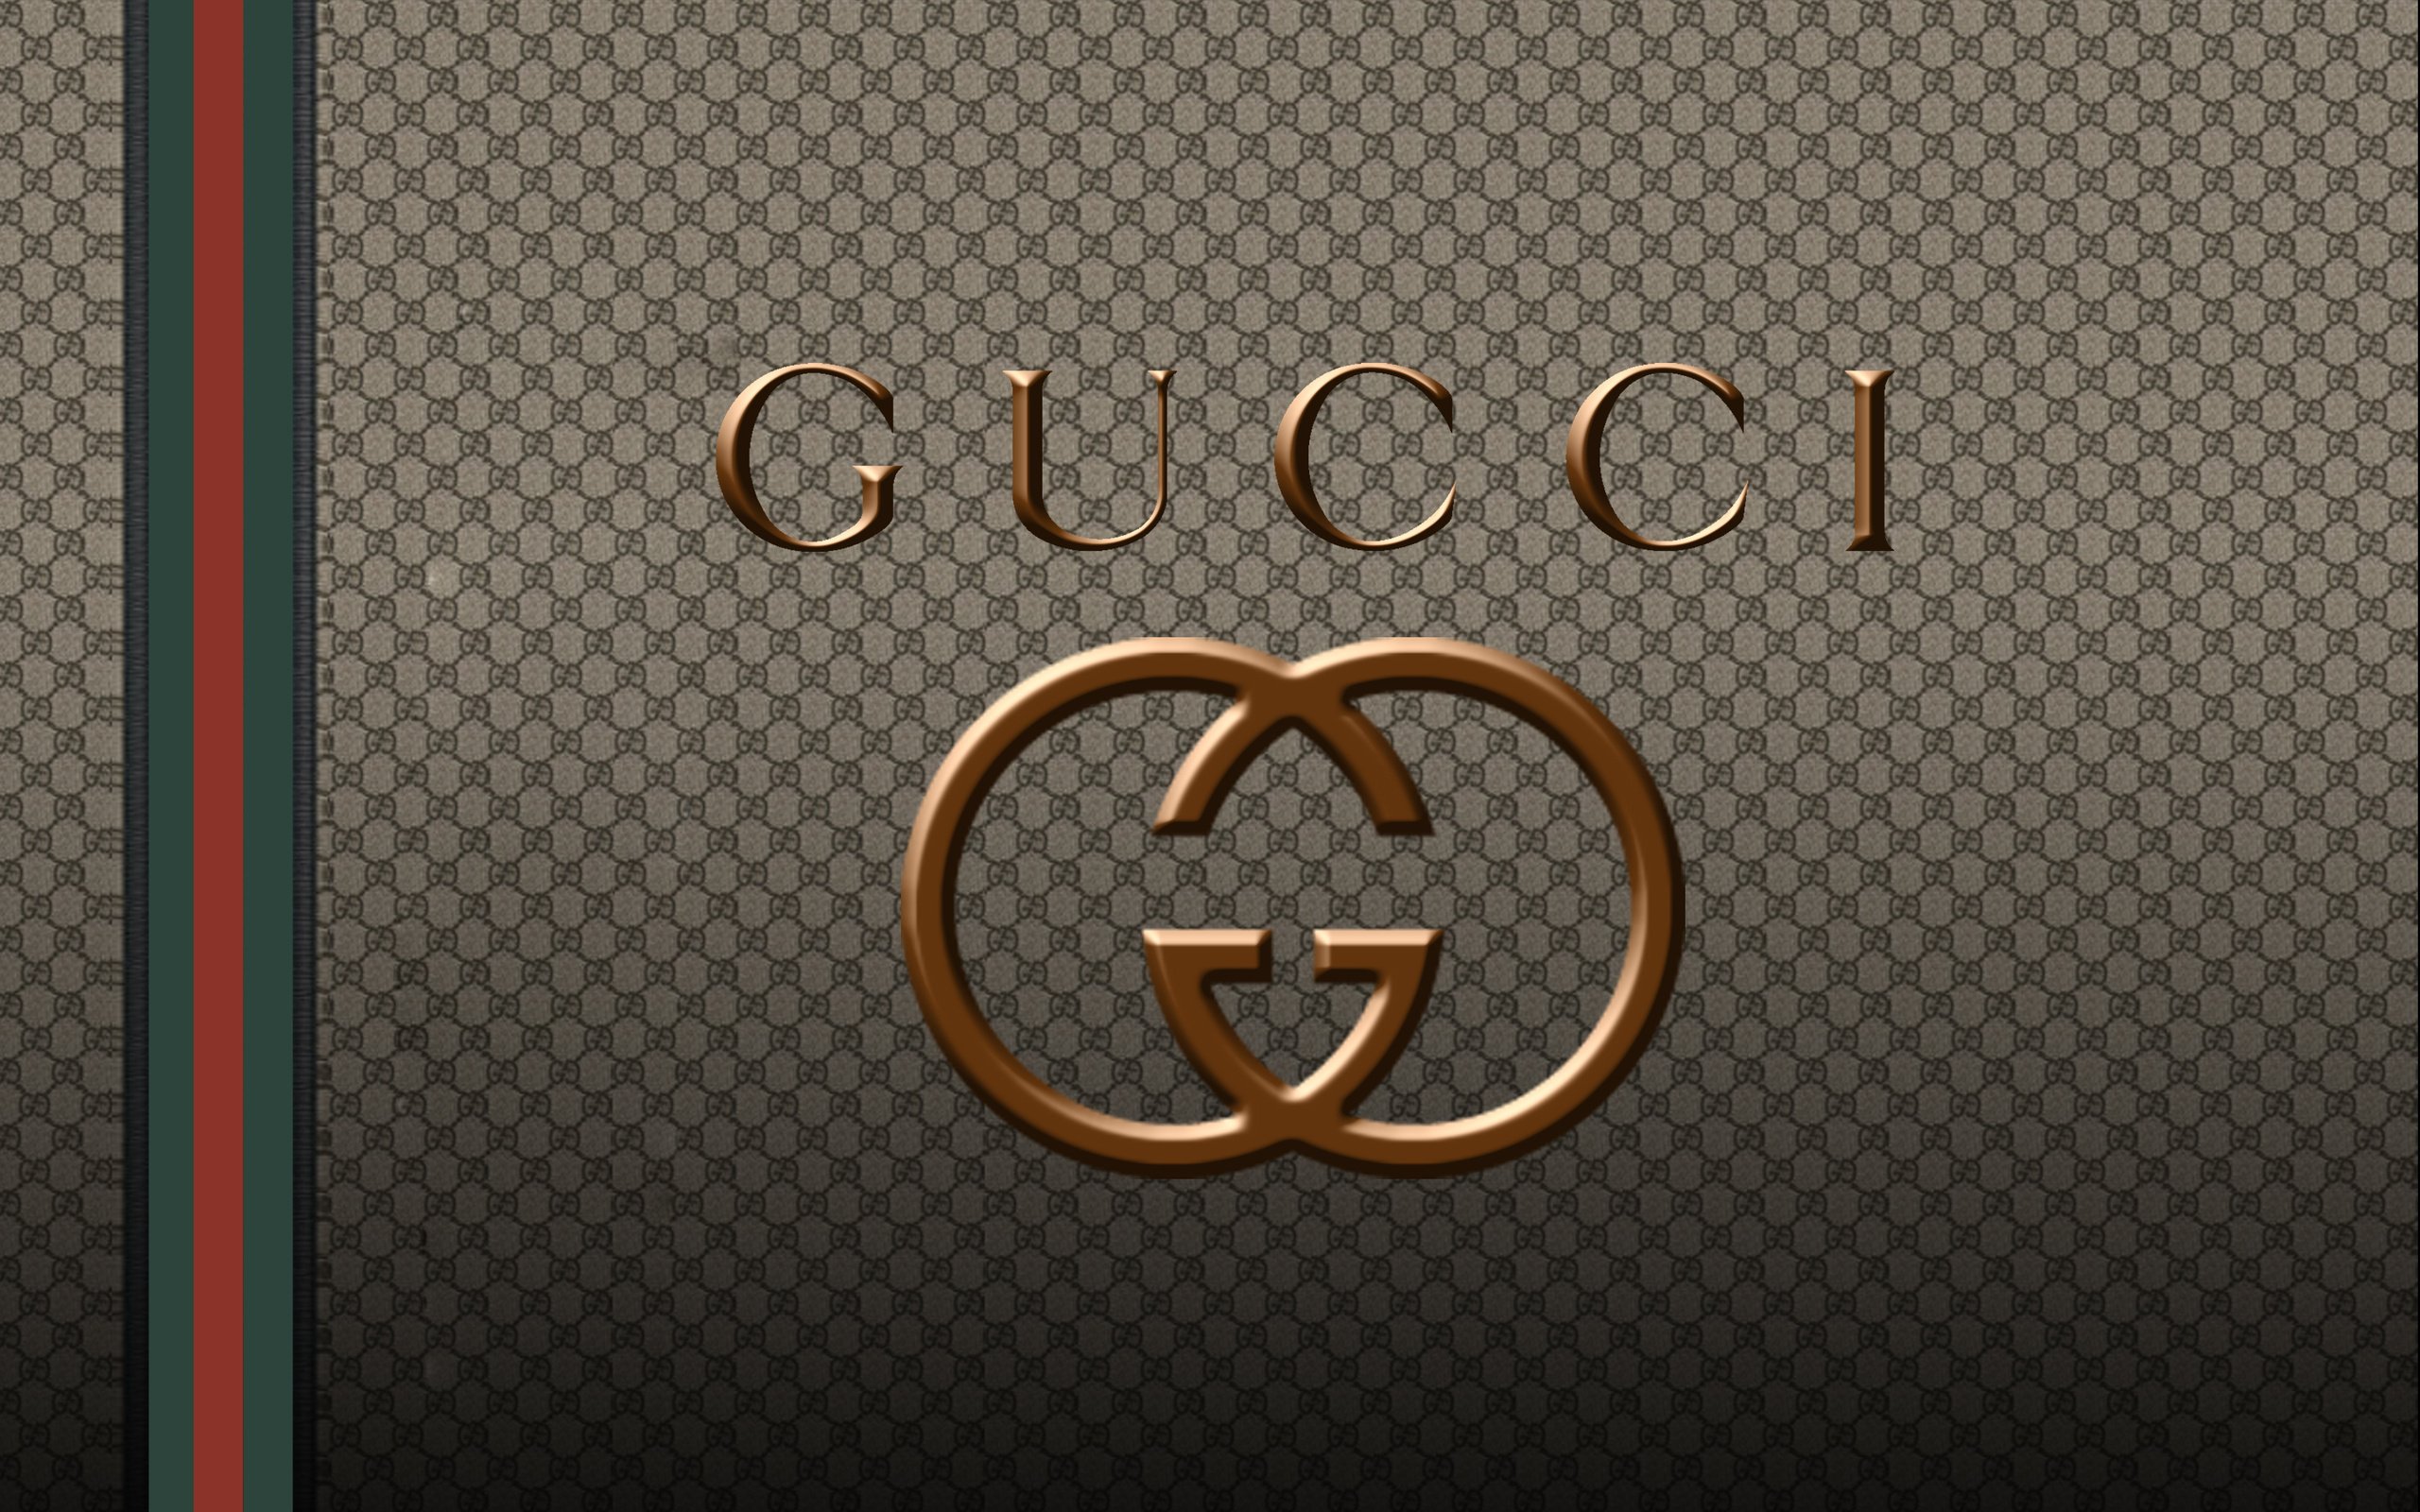 Supreme Gucci Wallpapers - Wallpaper Cave